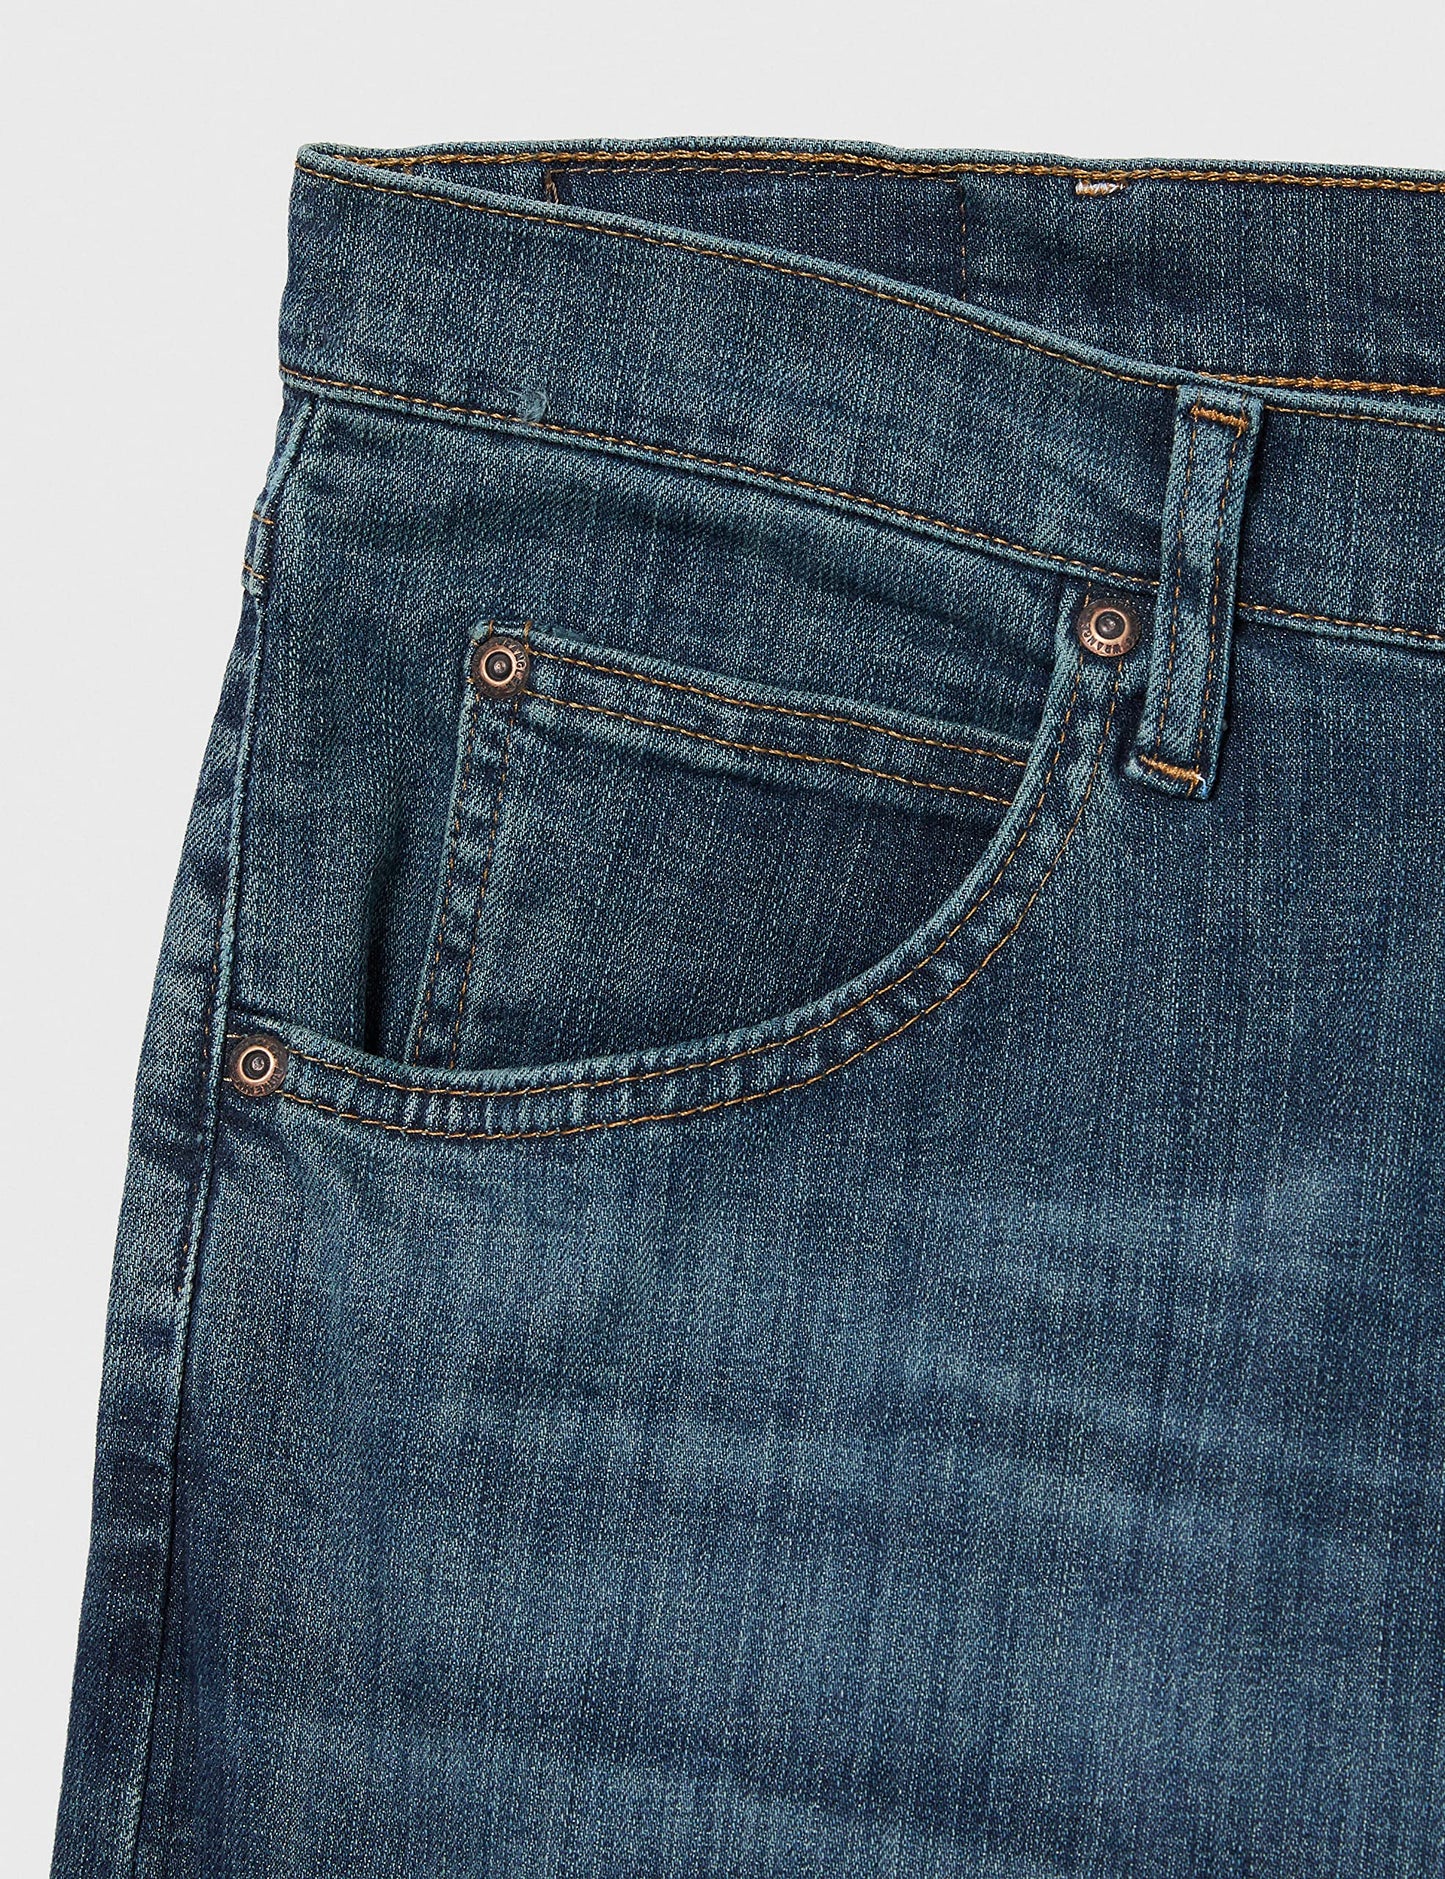 Wrangler Authentics Men's Classic 5-Pocket Regular Fit Jean, Twilight Flex, 30W x 29L